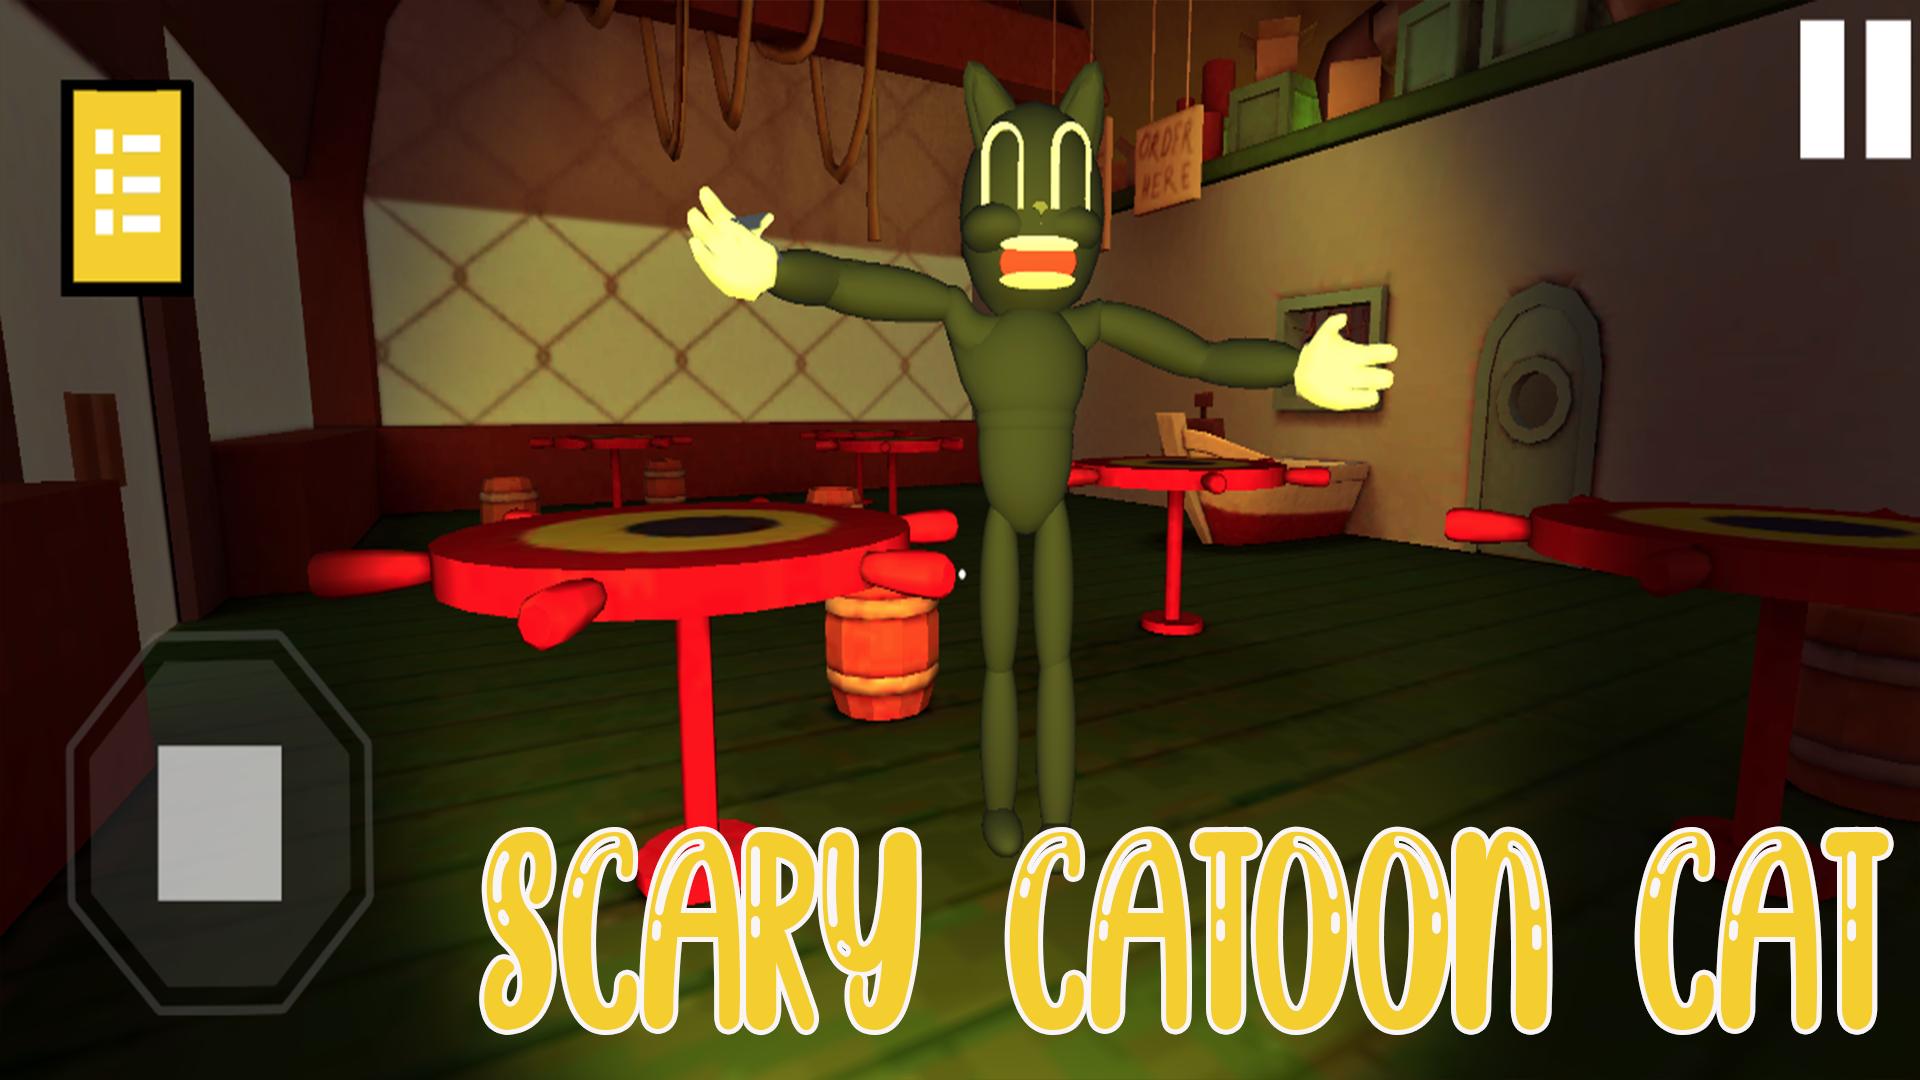 Scary Cartoon Cat Escape Game 1.0 Screenshot 7